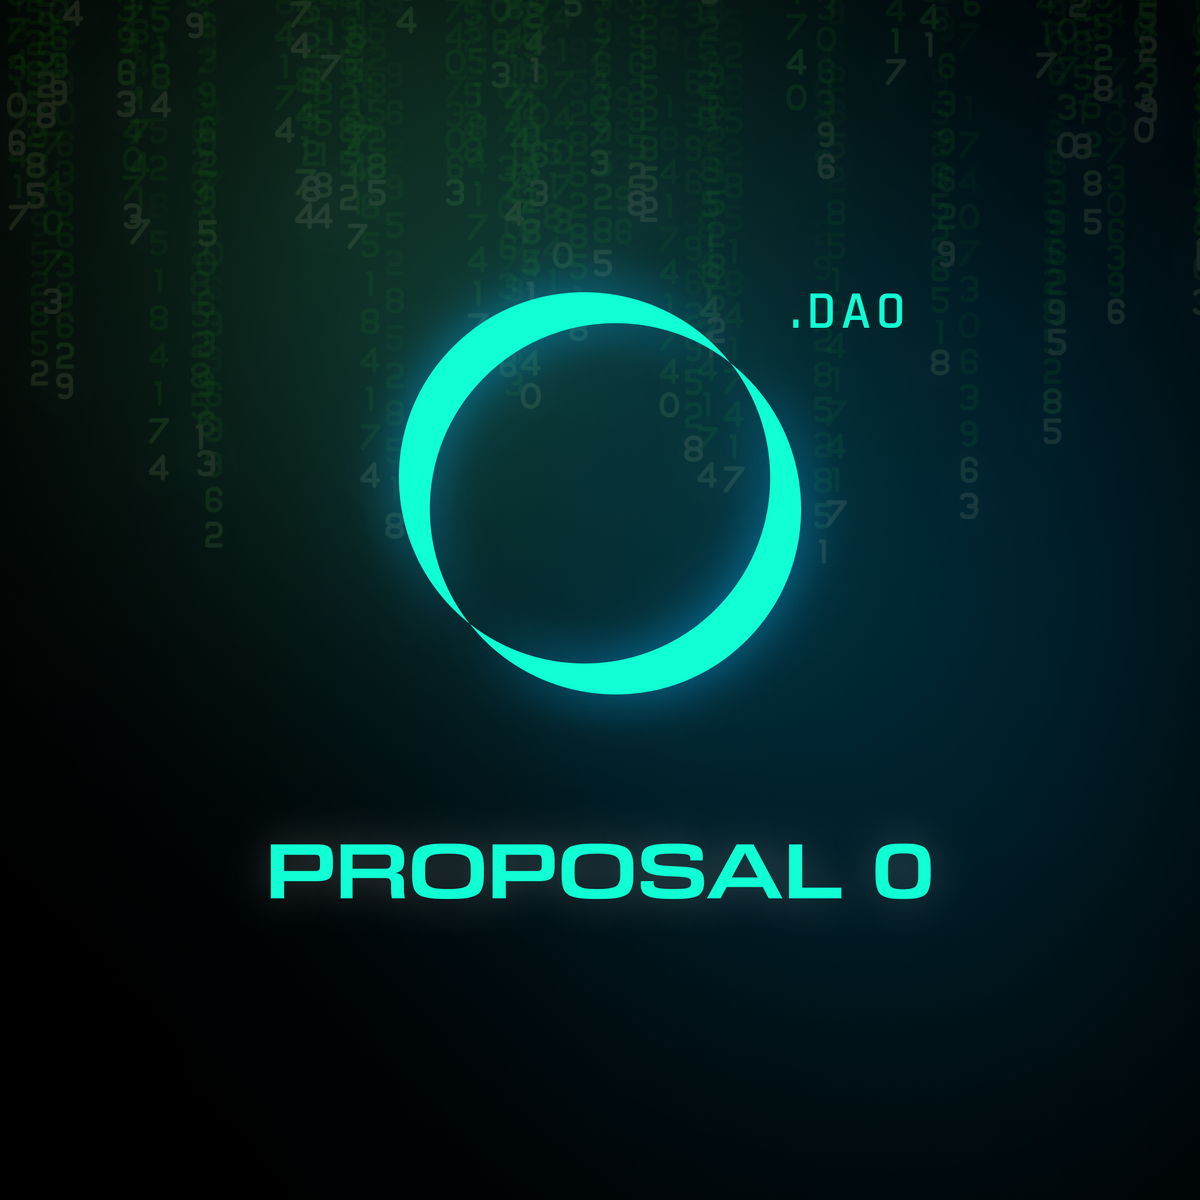 zDAO Proposal 0